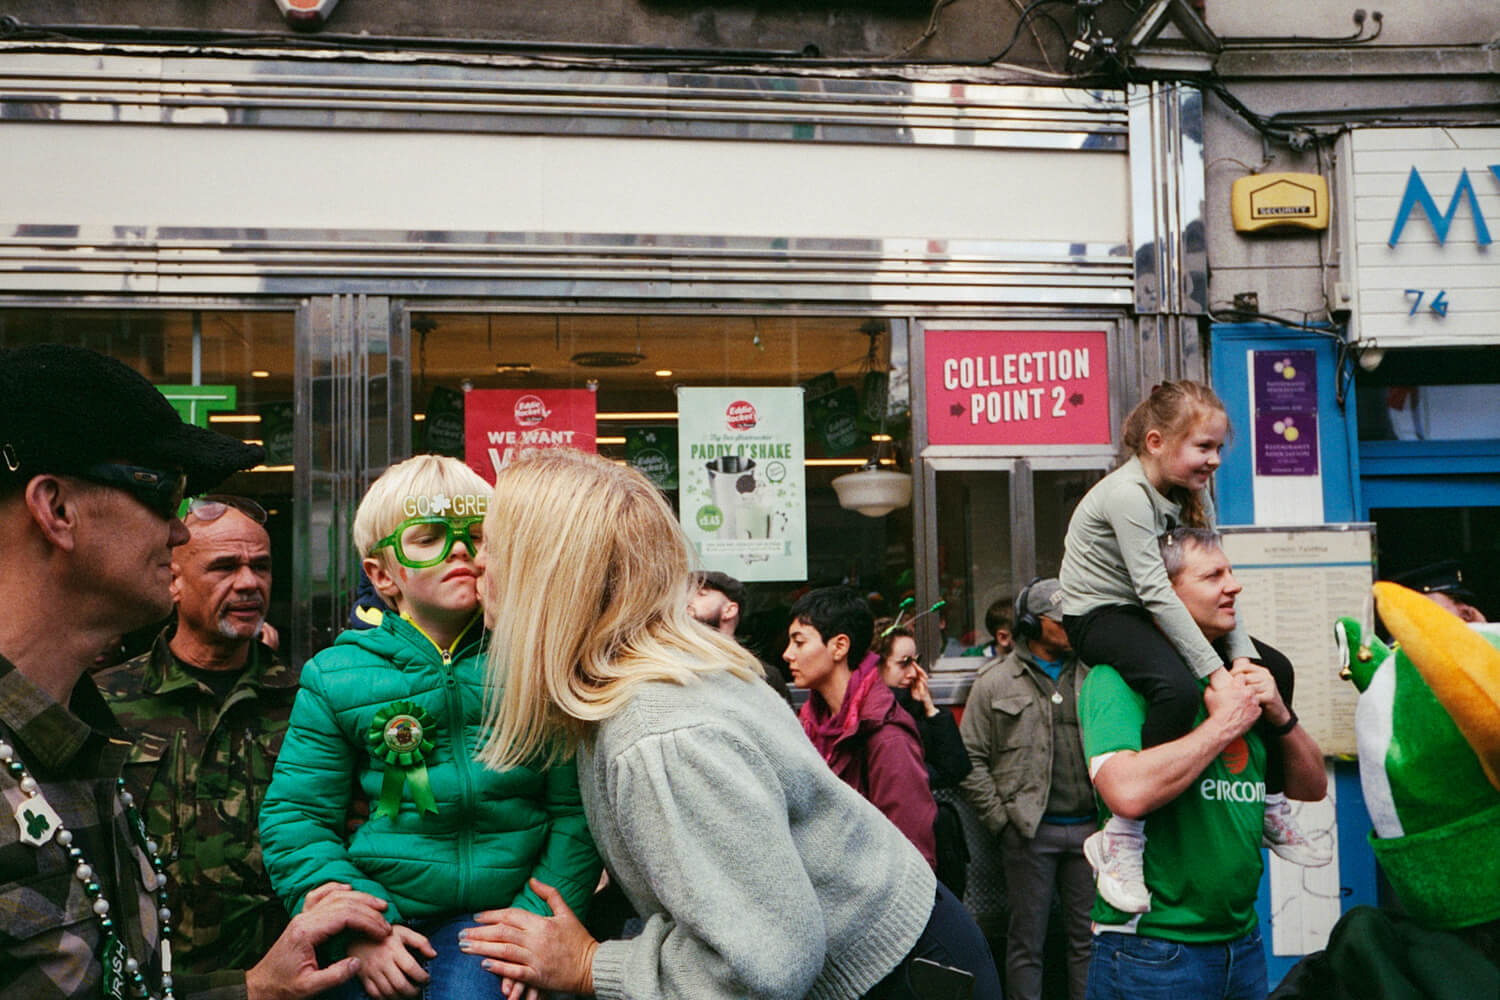 5 Frames... Of Dublin's St Patrick's Day on Adox Color Mission 200 (35mm Format / EI 200 / Leica M6 + Voigtlander 35mm f/2.5 Color Skopar) - by Valentine de Villemeur